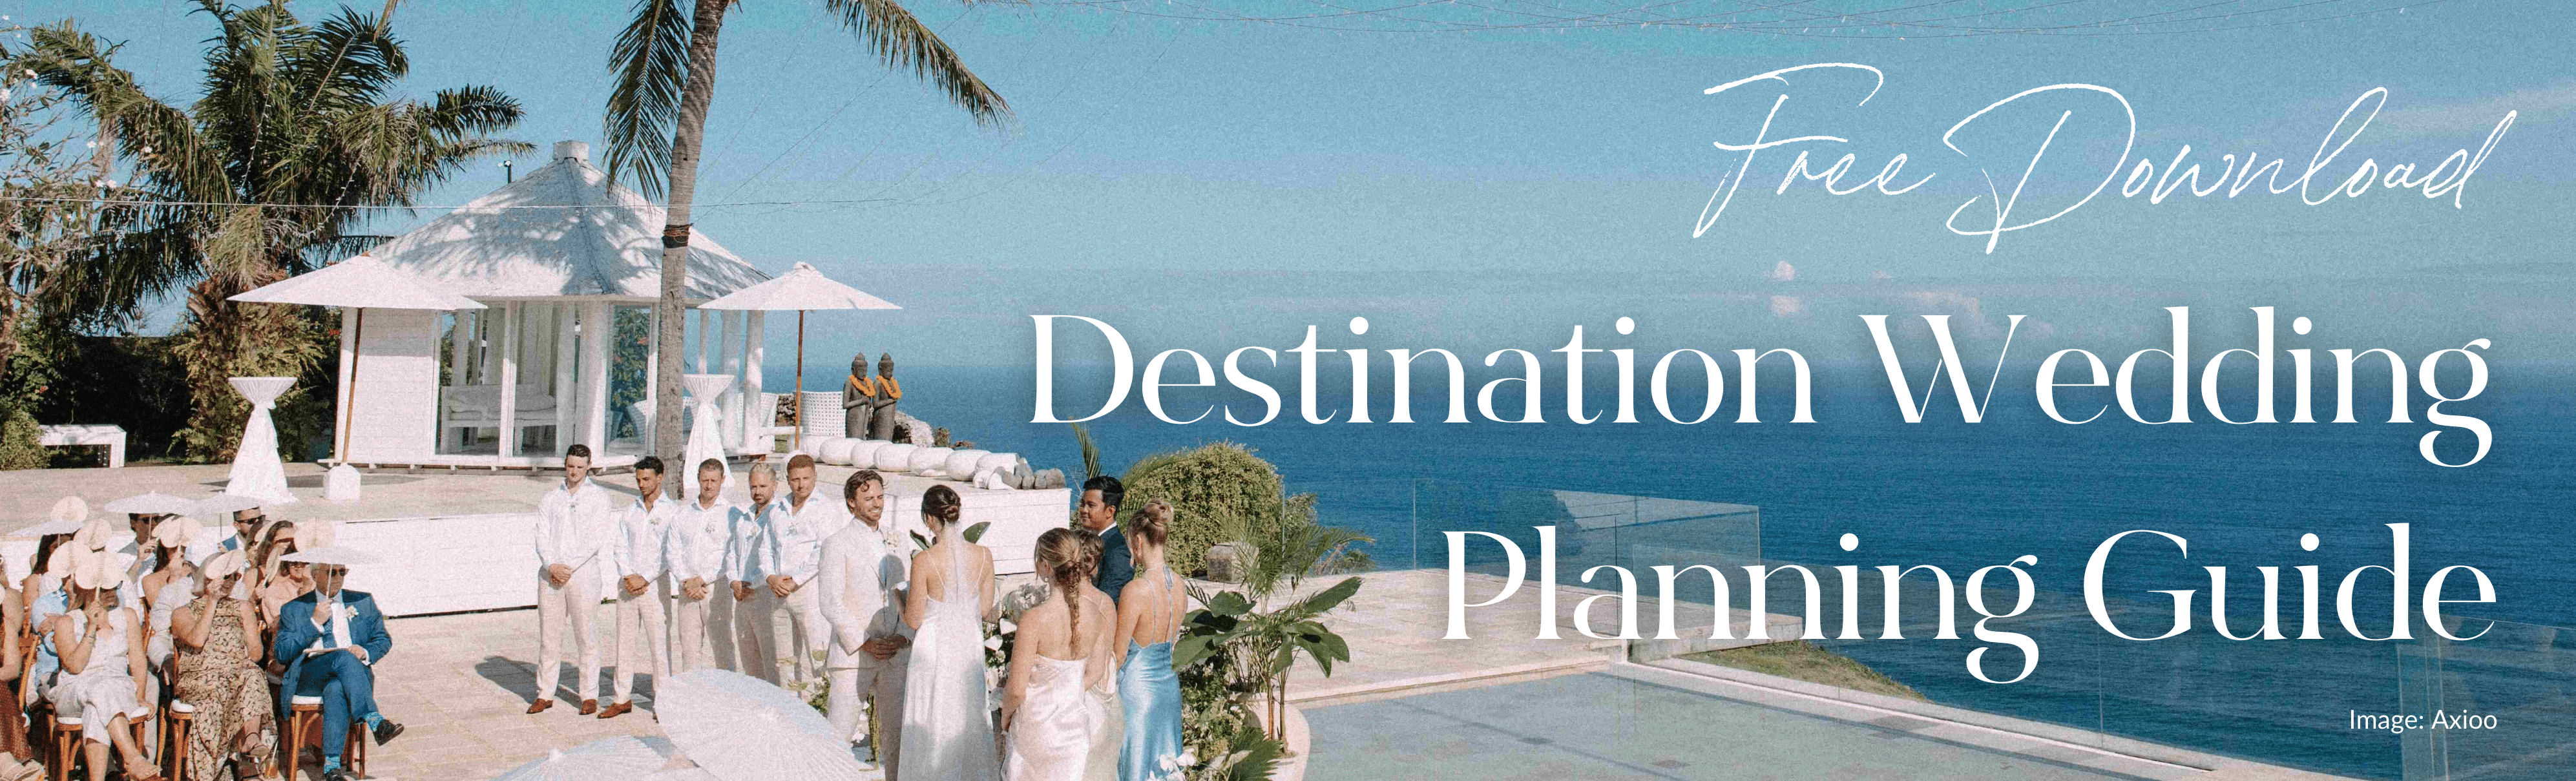 How to plan a destination wedding photo by Axioo Bali